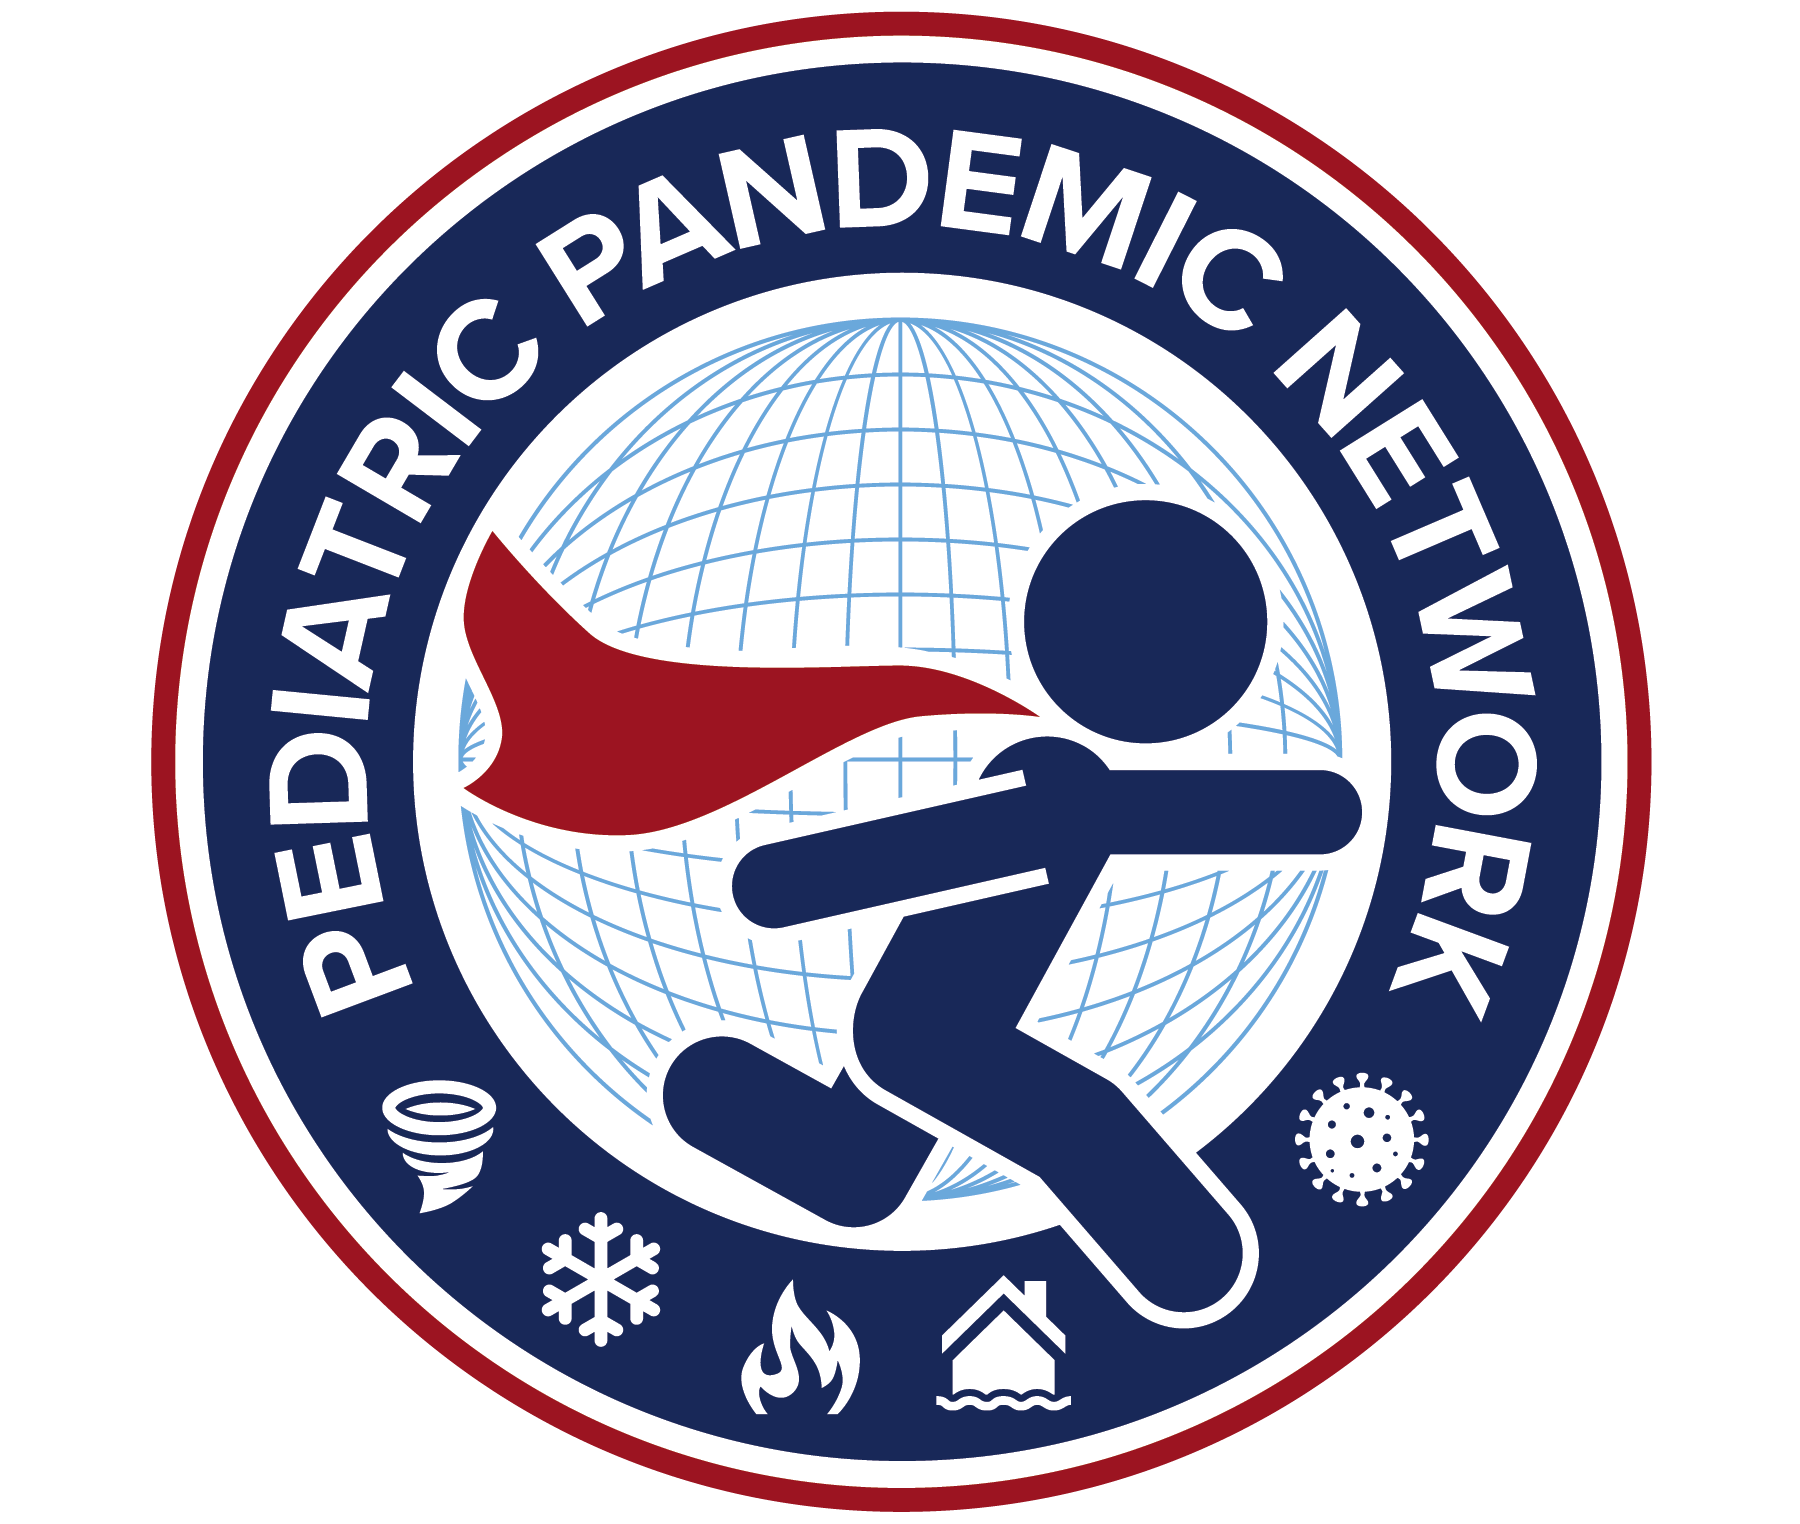 Pediatric Pandemic Network logo